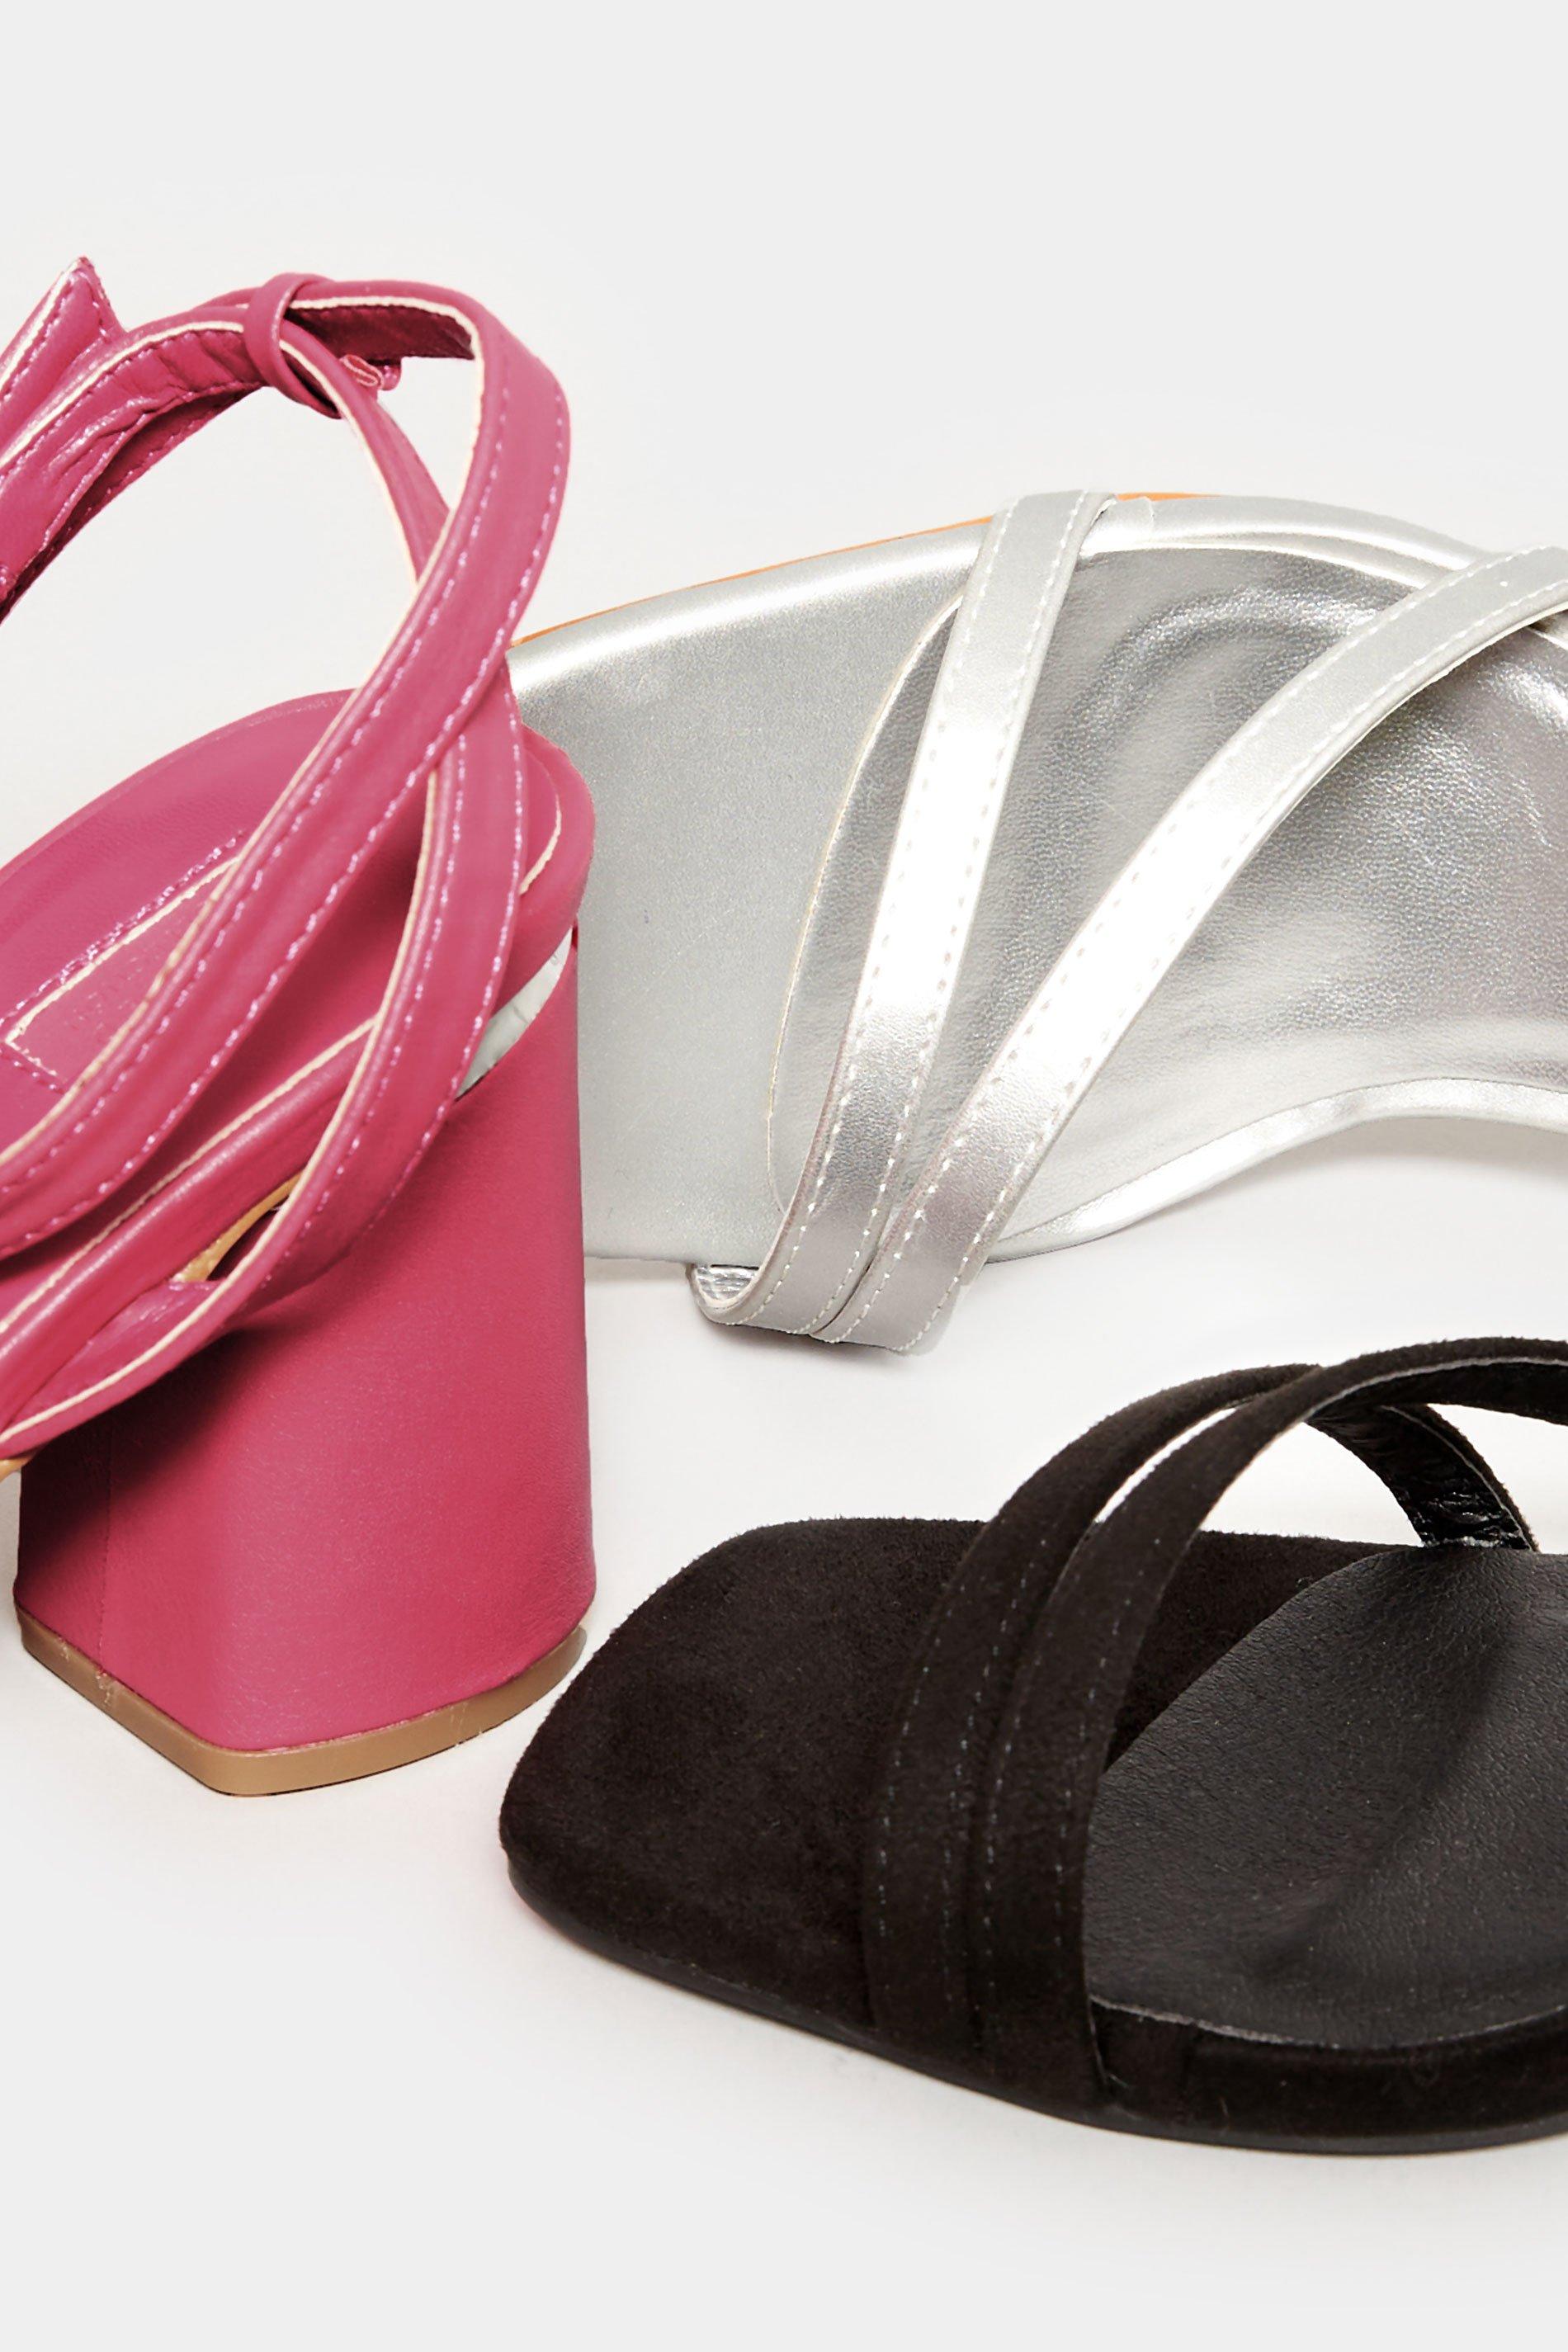 Dorothy Perkins Tilly Cross Strap Mid Block Heel Sandals in Pink | Lyst UK